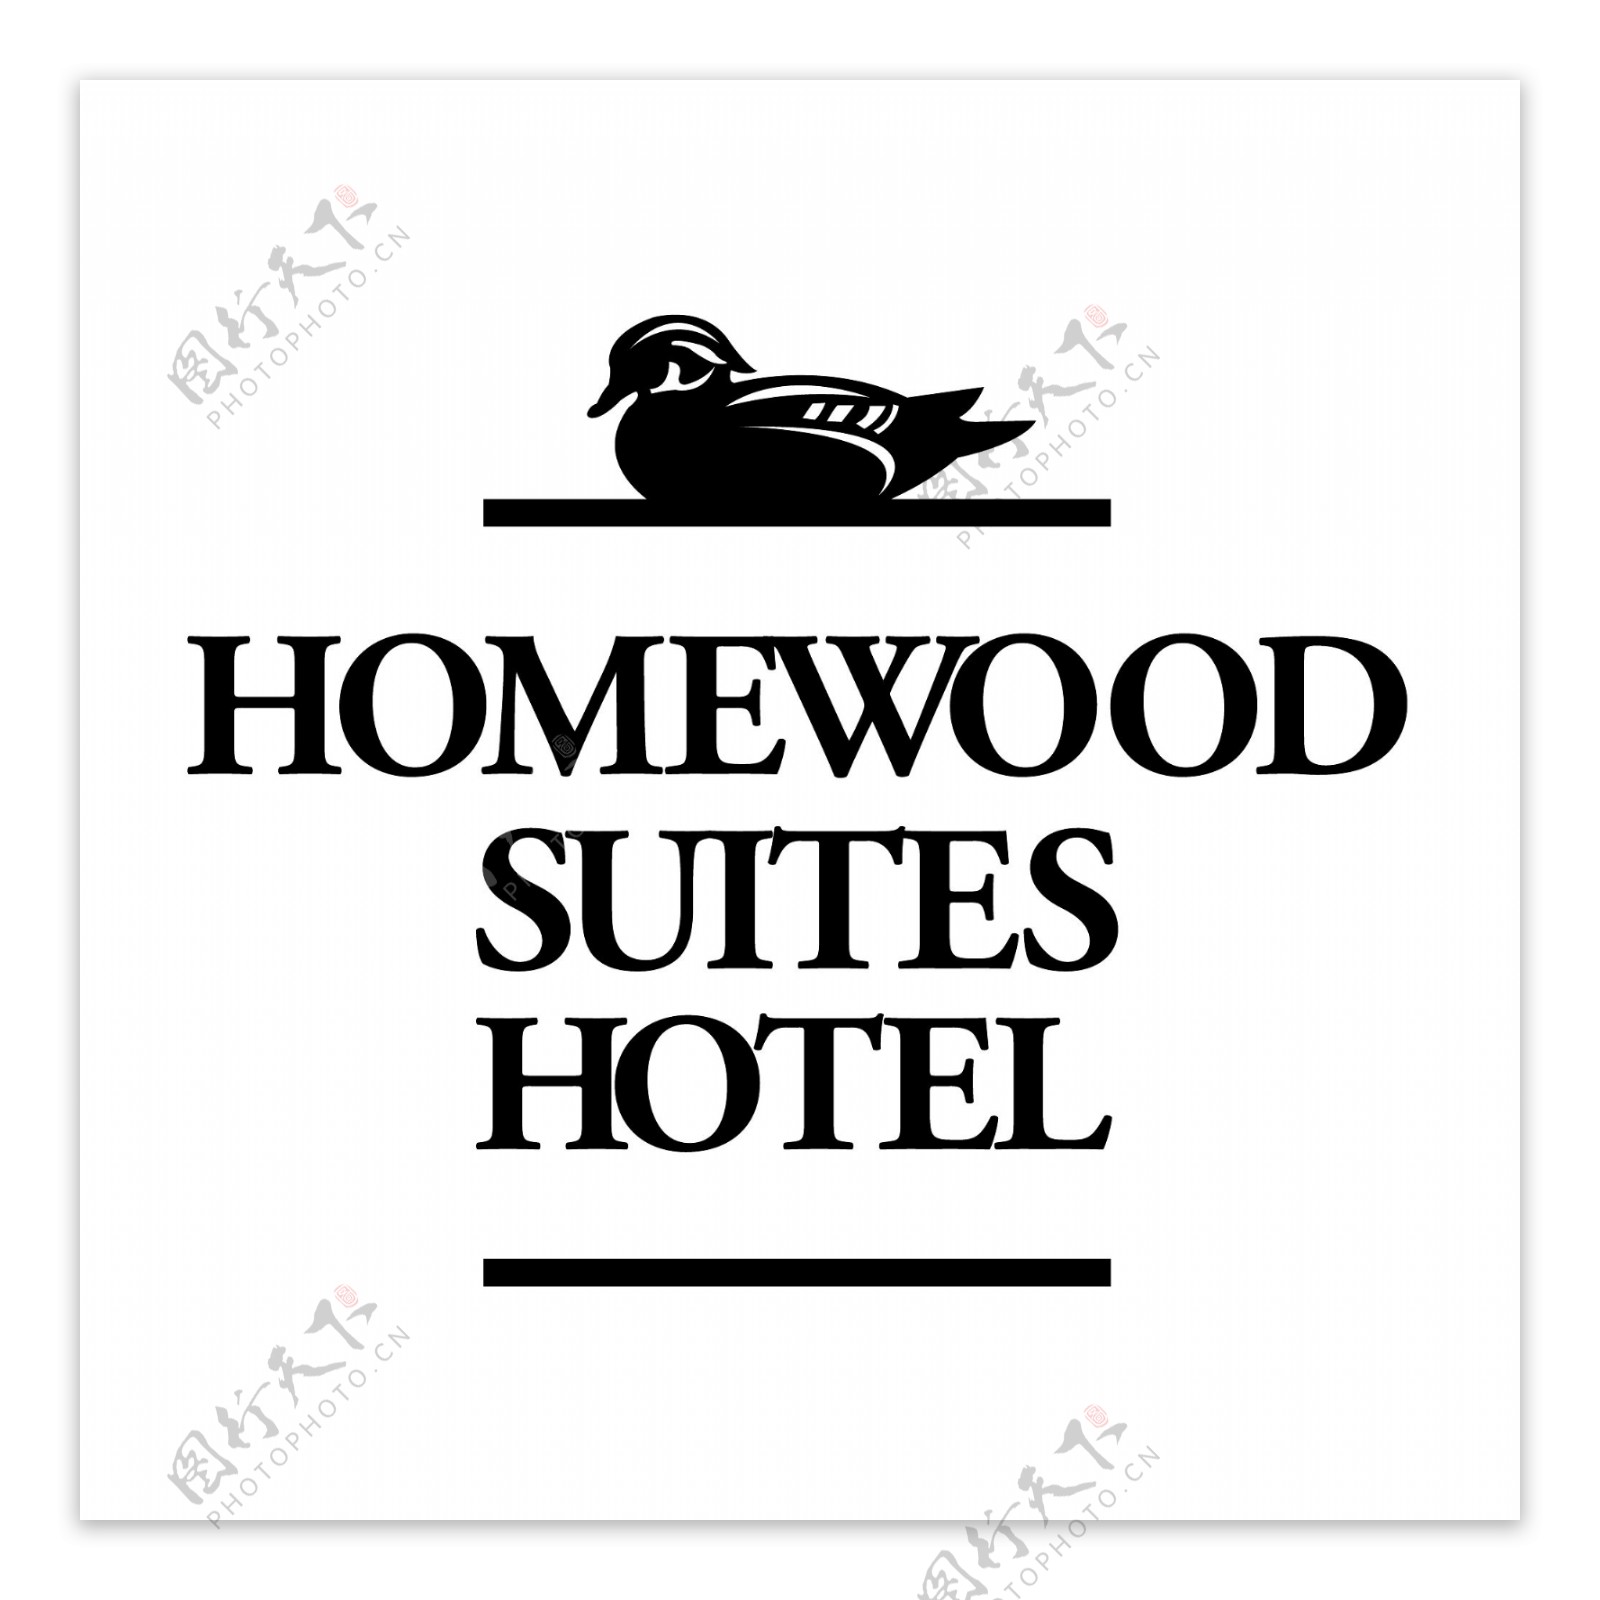 Homewood套房酒店